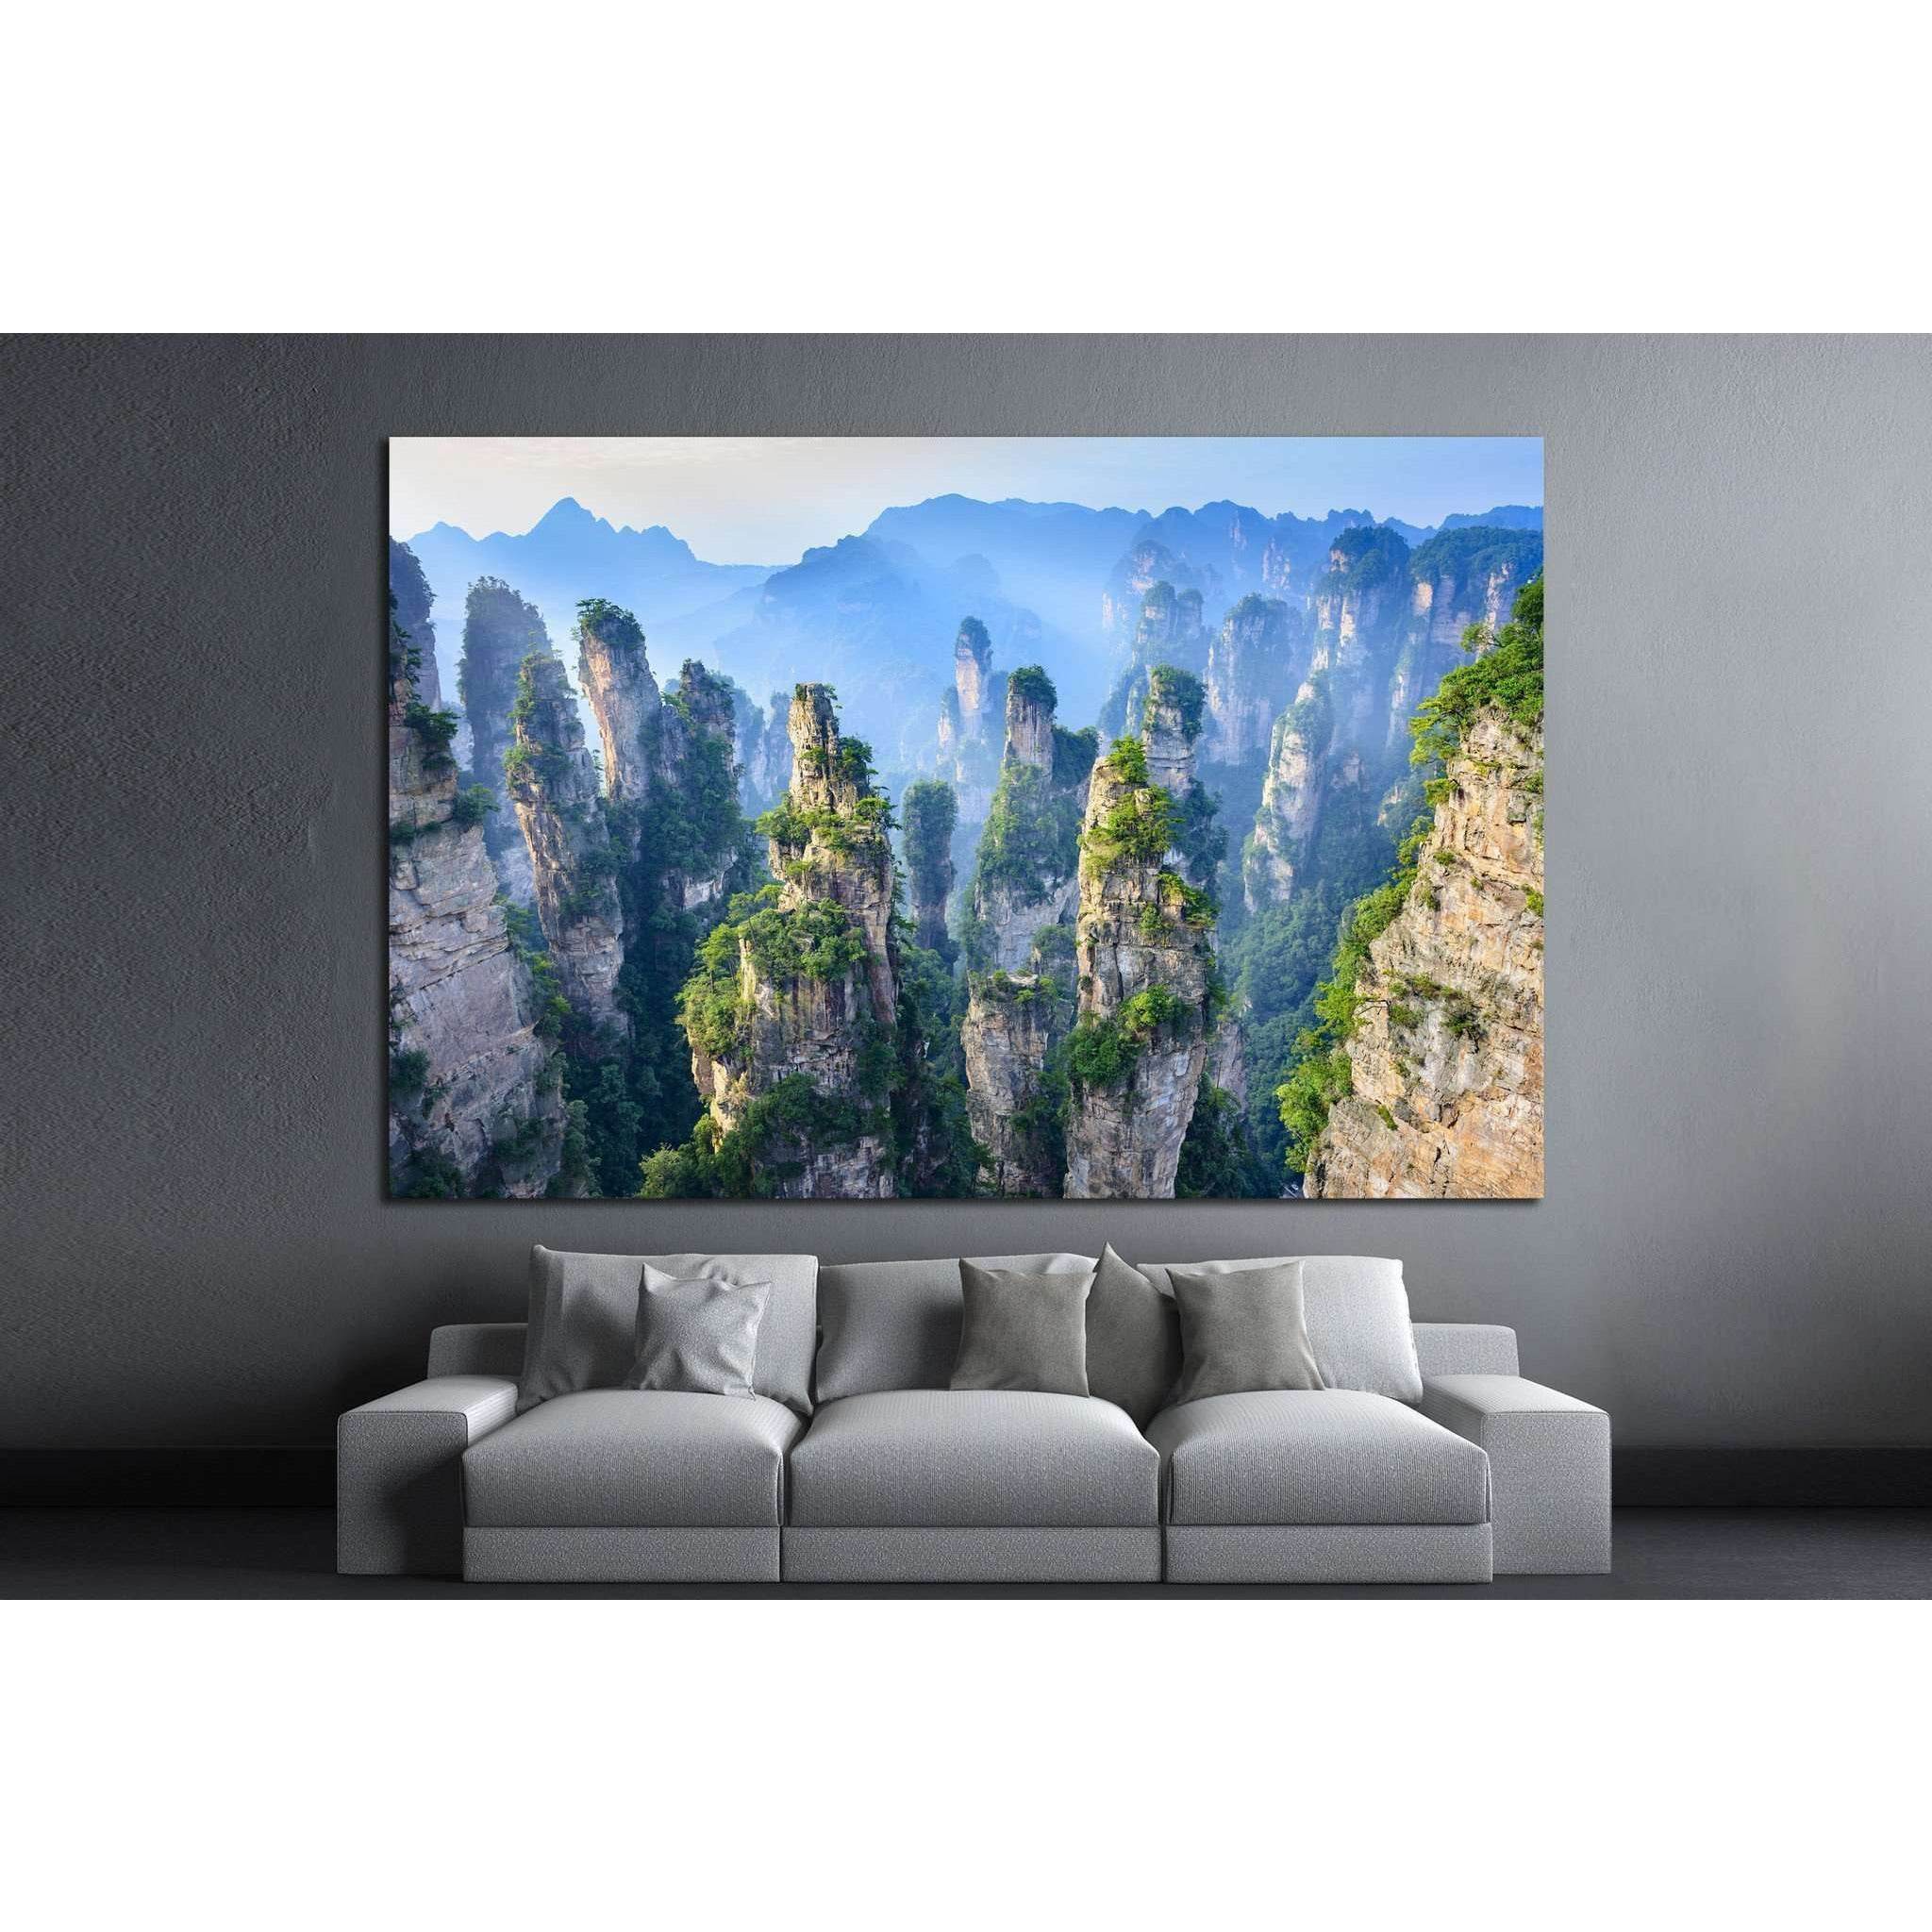 Landscape of Zhangjiajie, China №1315 Ready to Hang Canvas Print